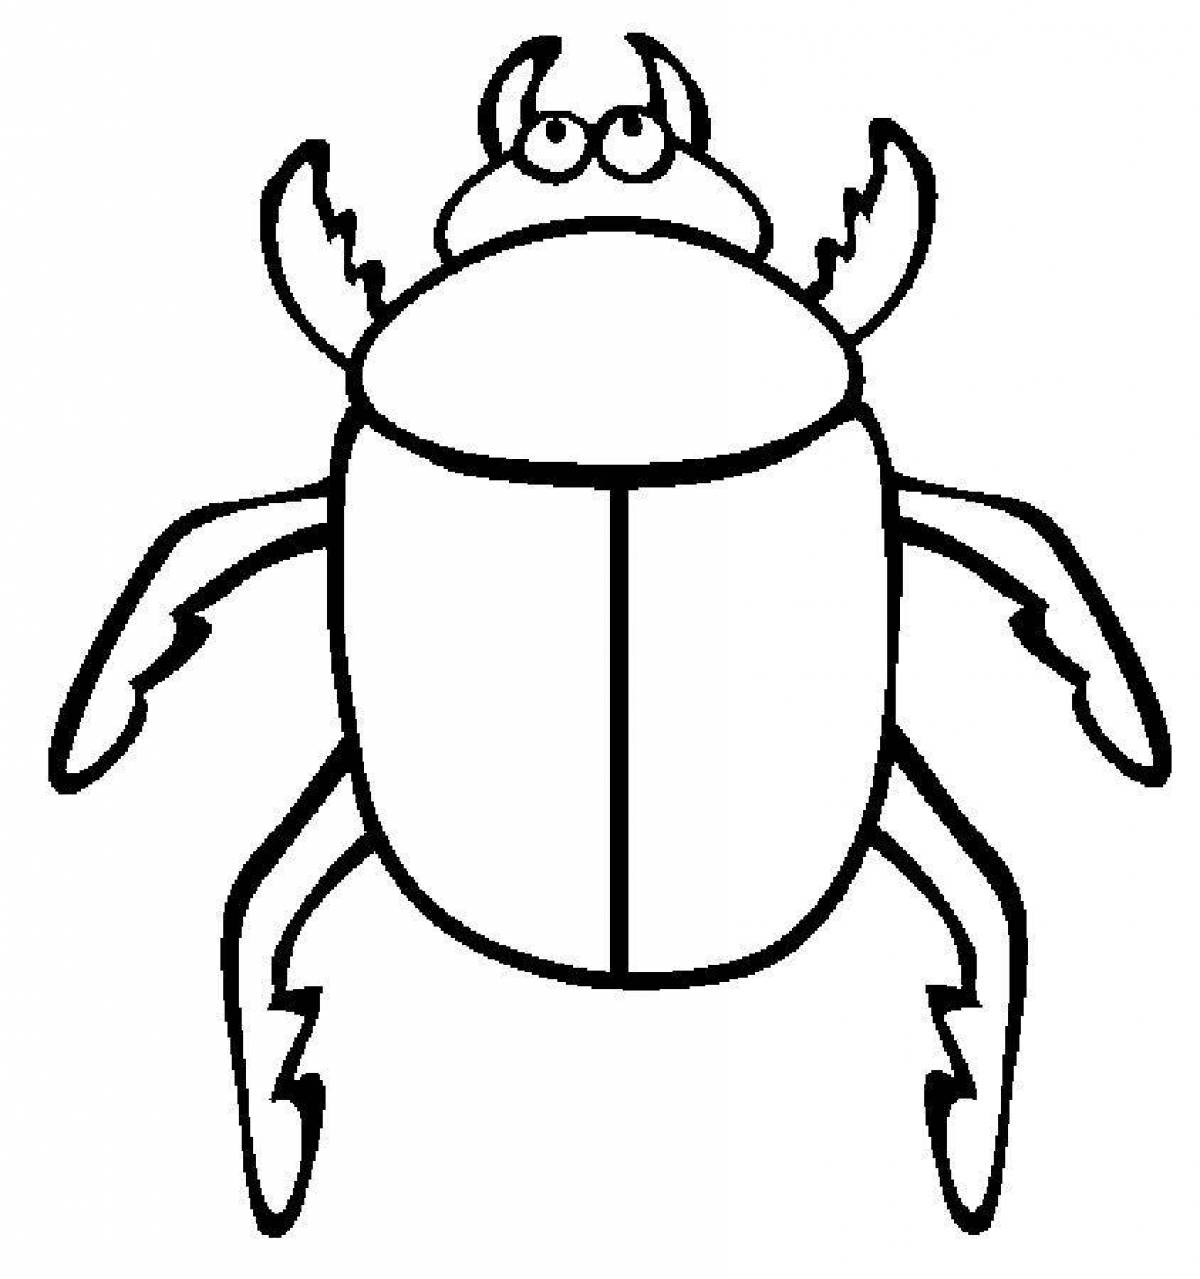 Stag beetle #5